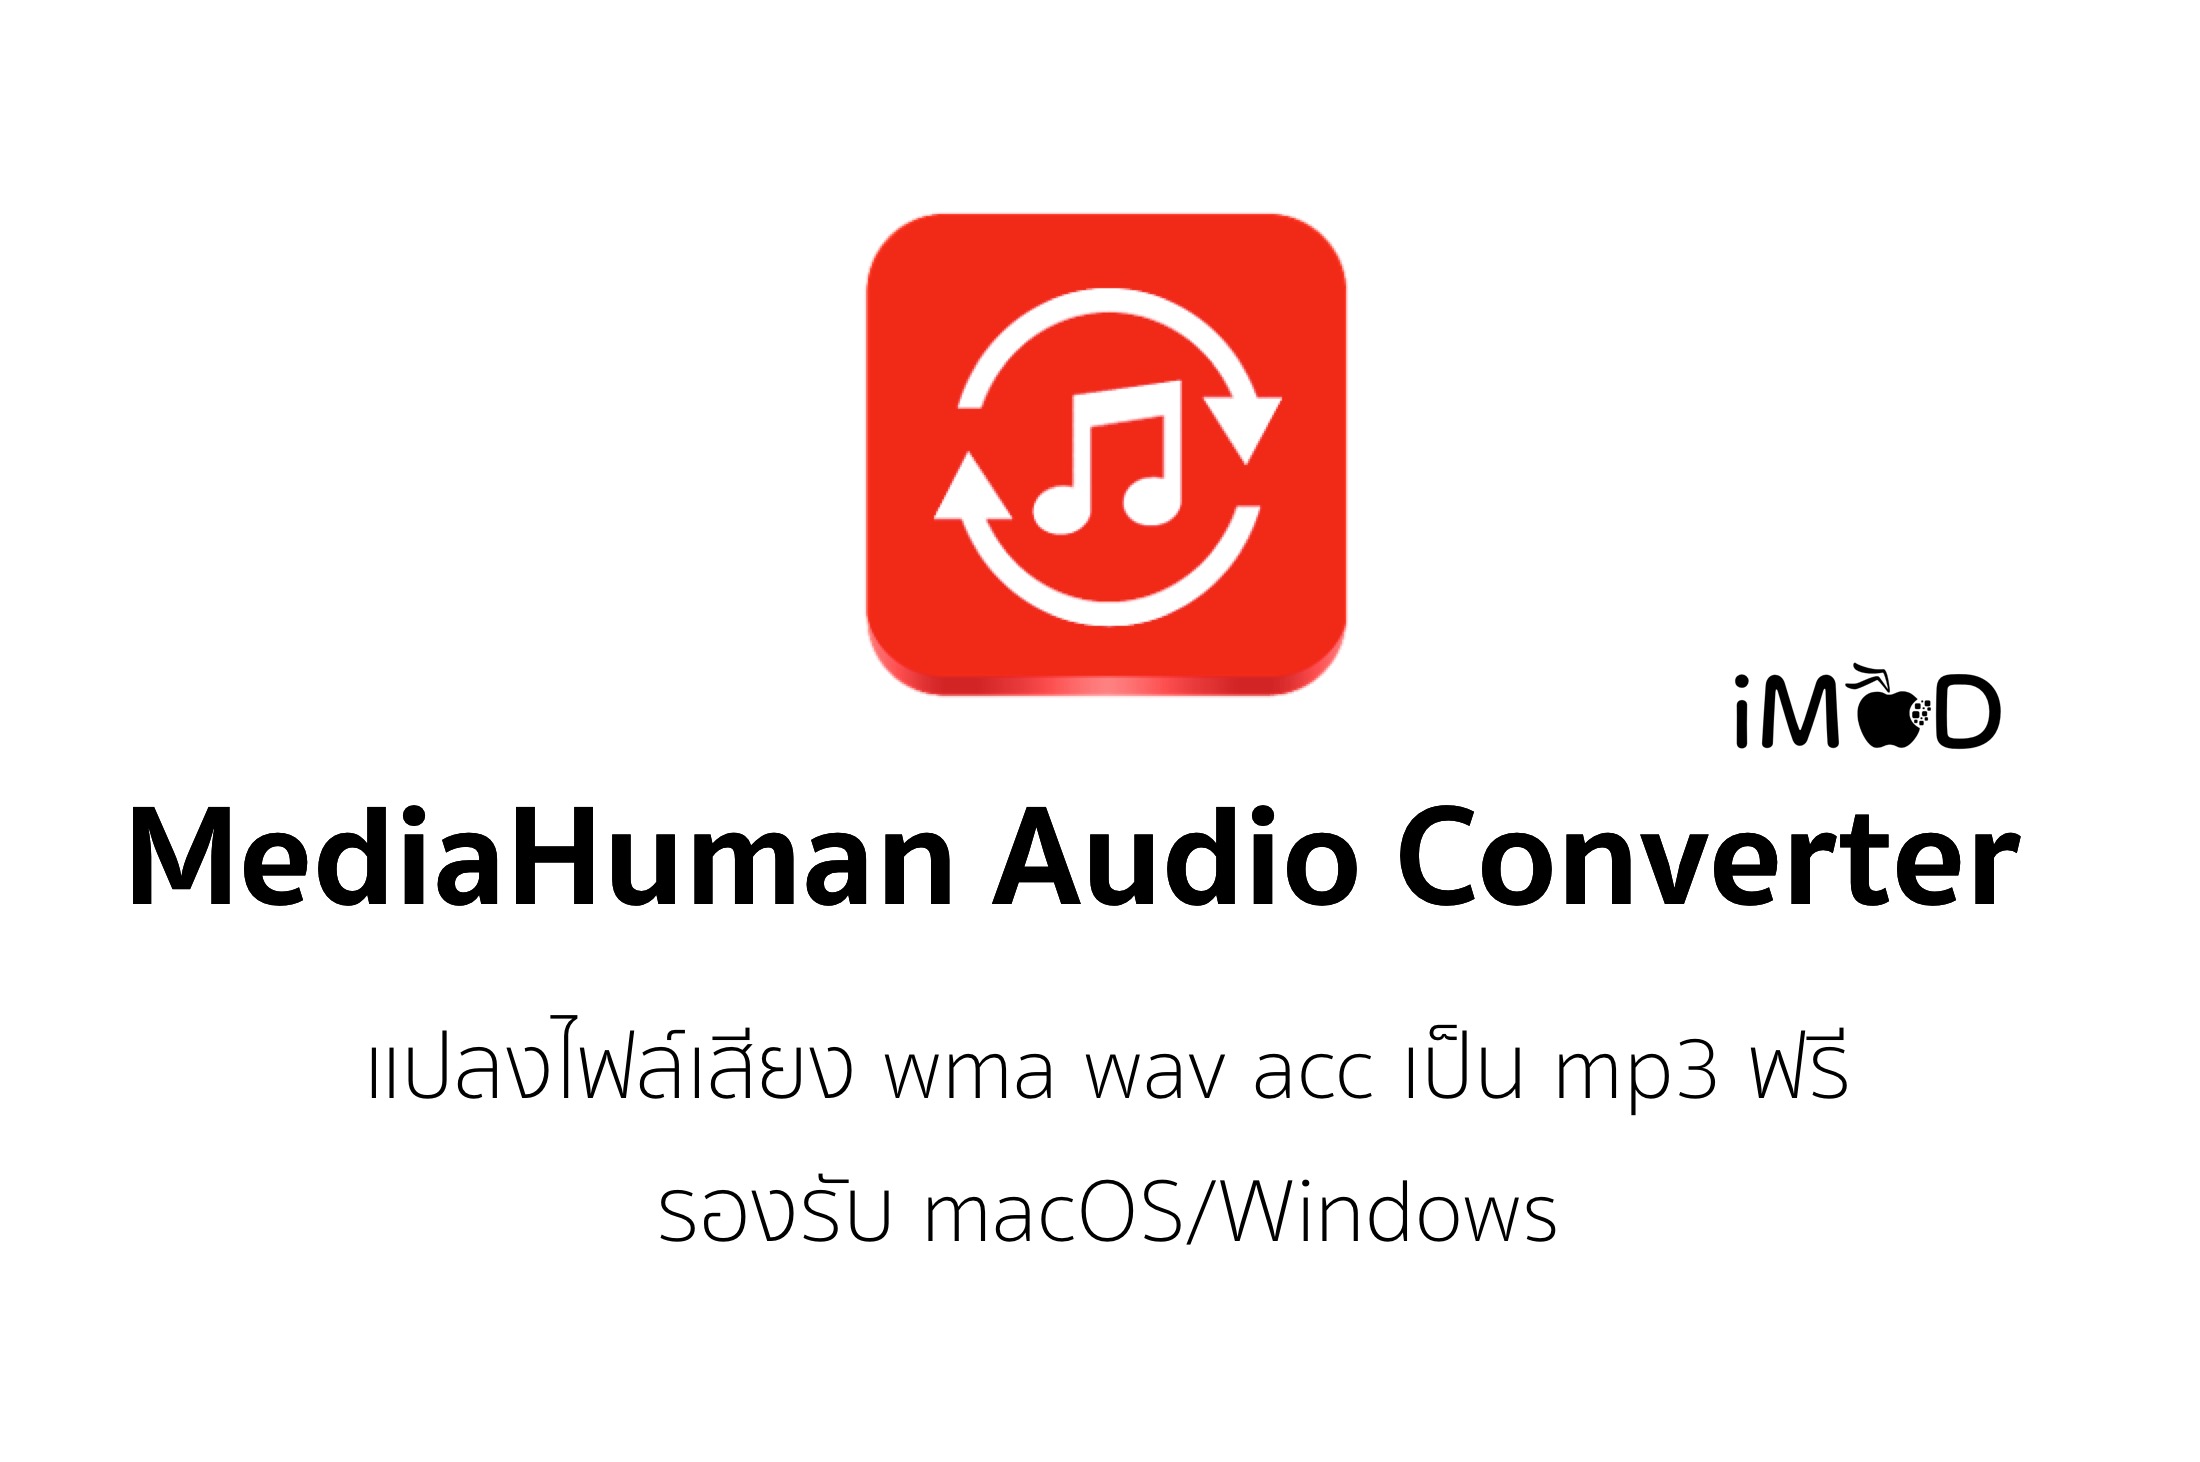 mediahuman audio converter wot